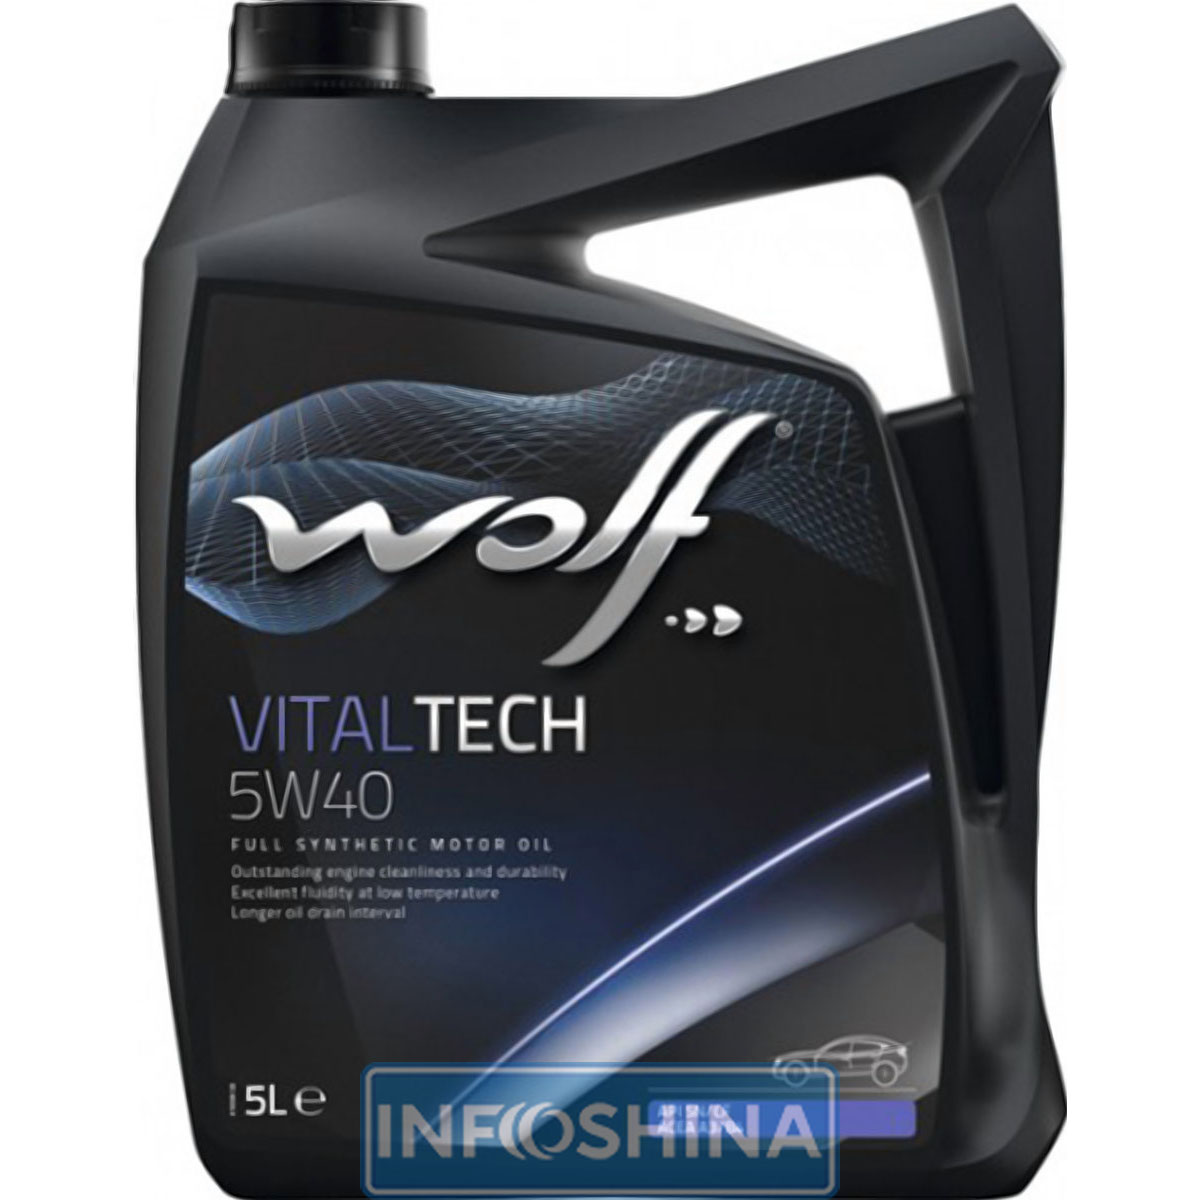 Купить масло Wolf Vitaltech 5W-40 (5л)